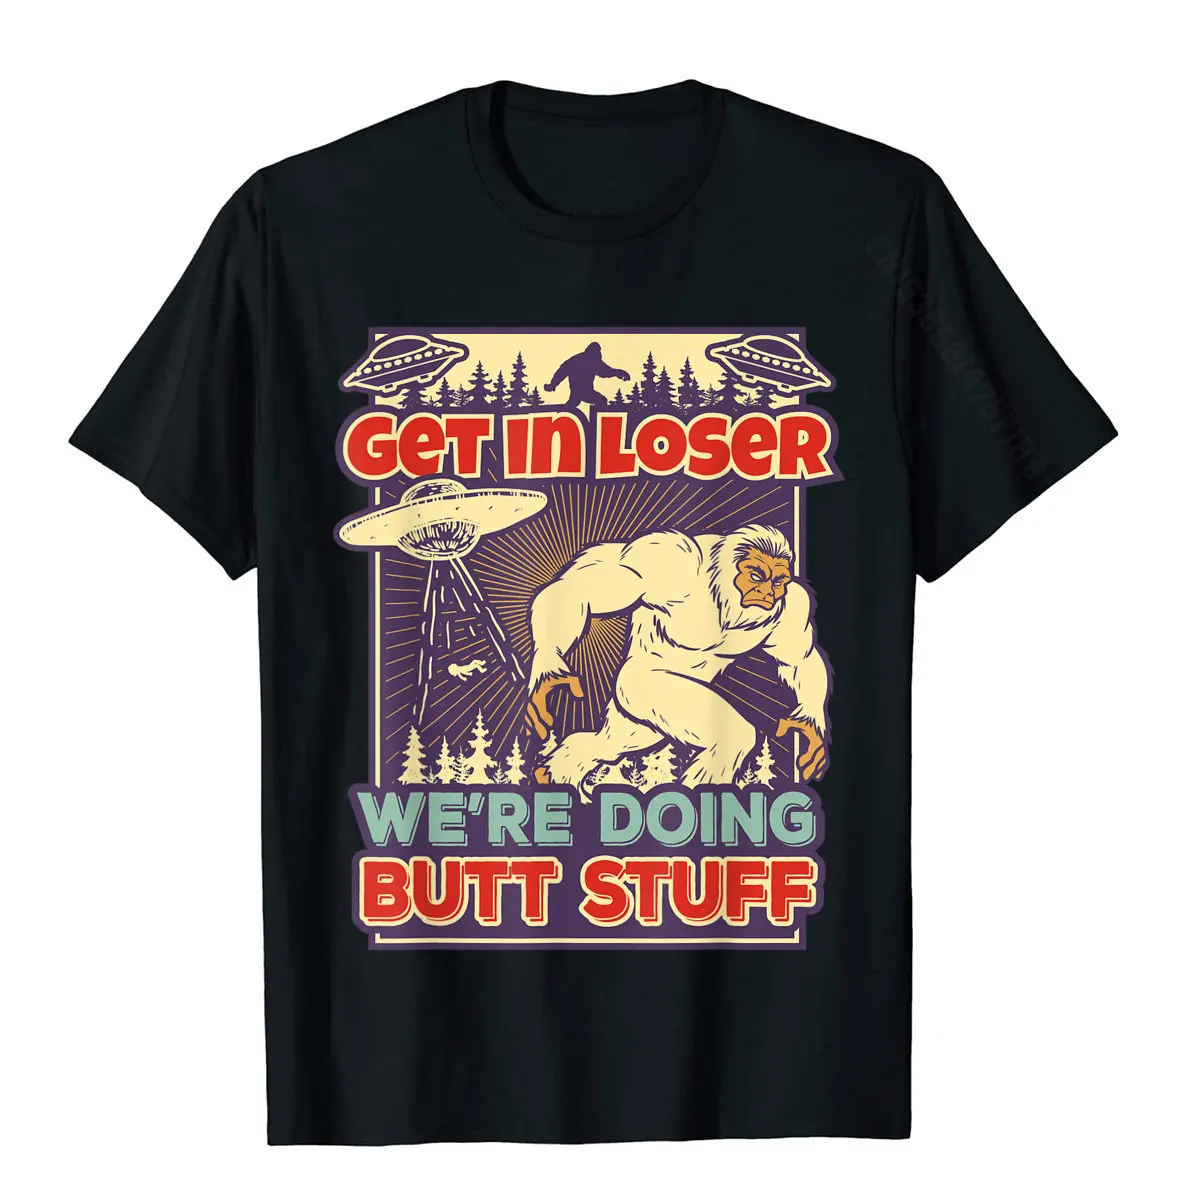 GET IN LOSER We're Doing Butt Stuff Shirt Aliens UFO Gift T-Shirt Tops T Shirt Cute Geek Cotton Mens T Shirts Geek